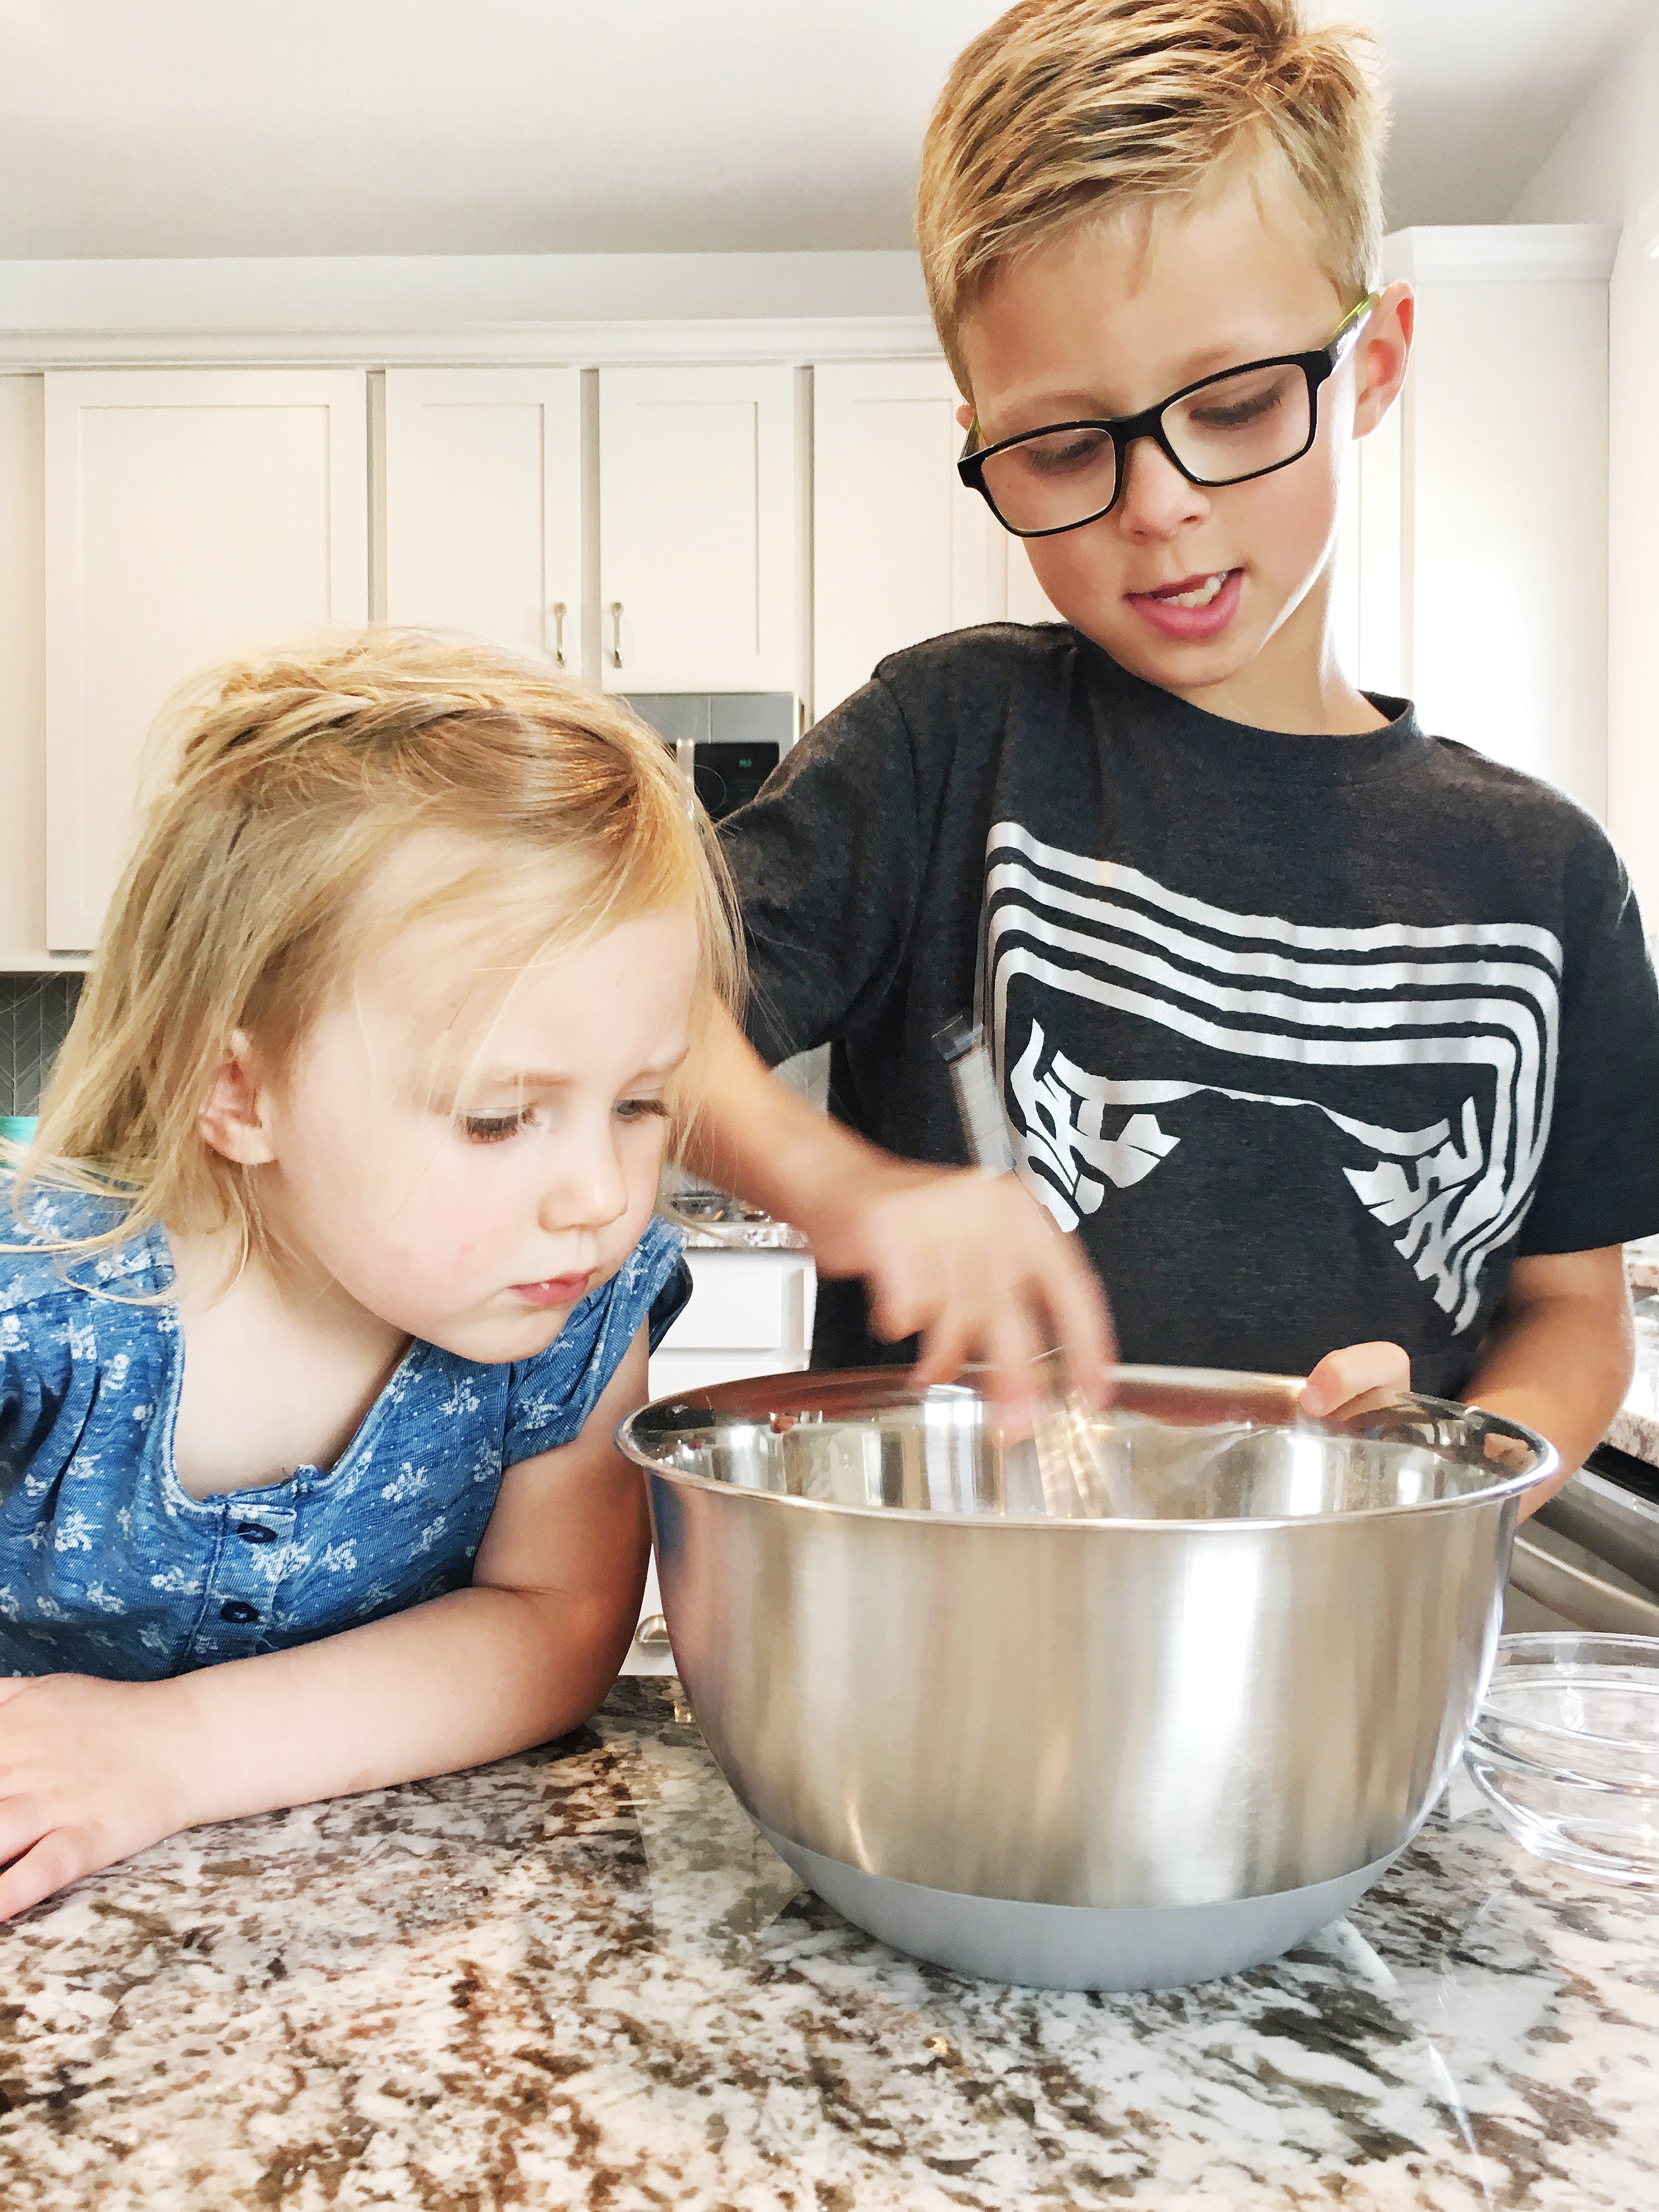 best tips for baking with kids. www.cakebycourtney.com